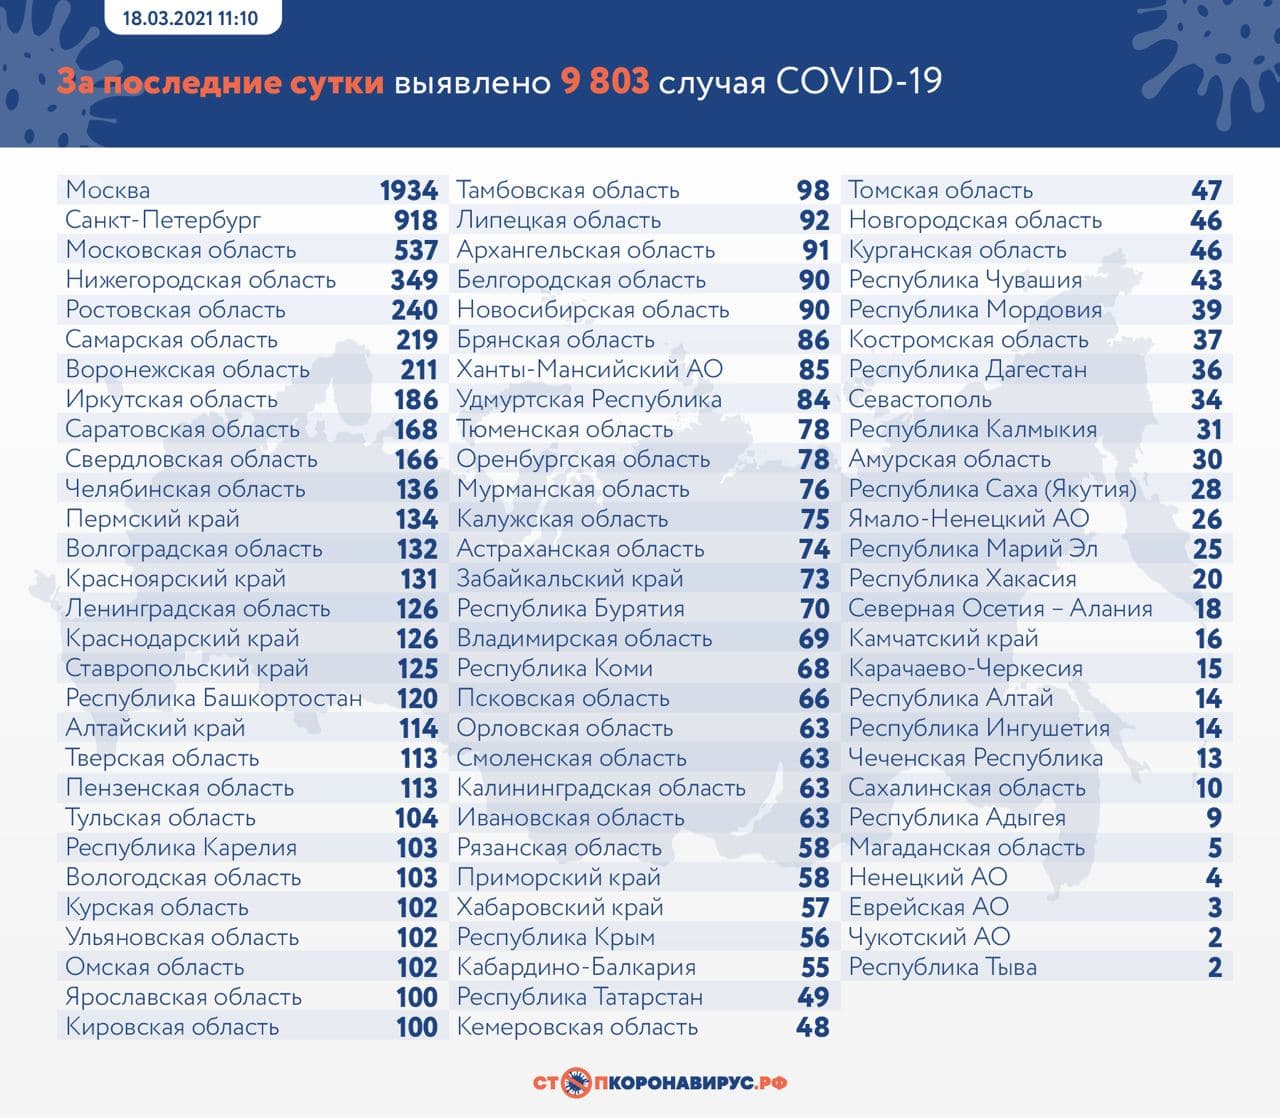 Оперативная статистика по коронавирусу в России на 18 марта